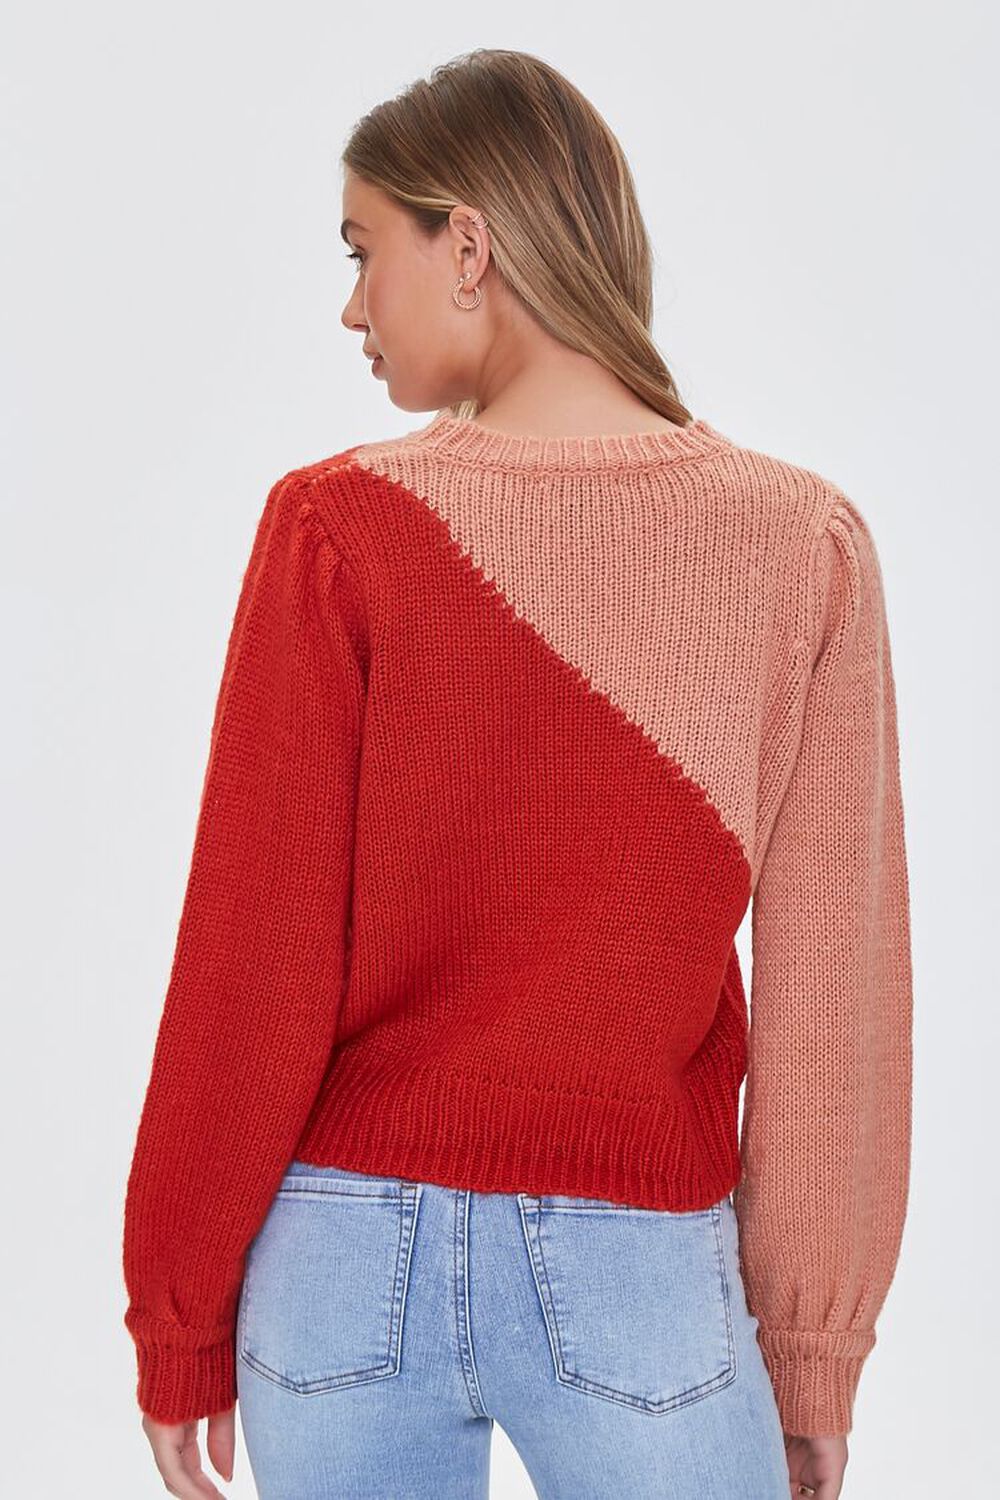 ROSE/MULTI Colorblock Ribbed-Trim Sweater, image 3